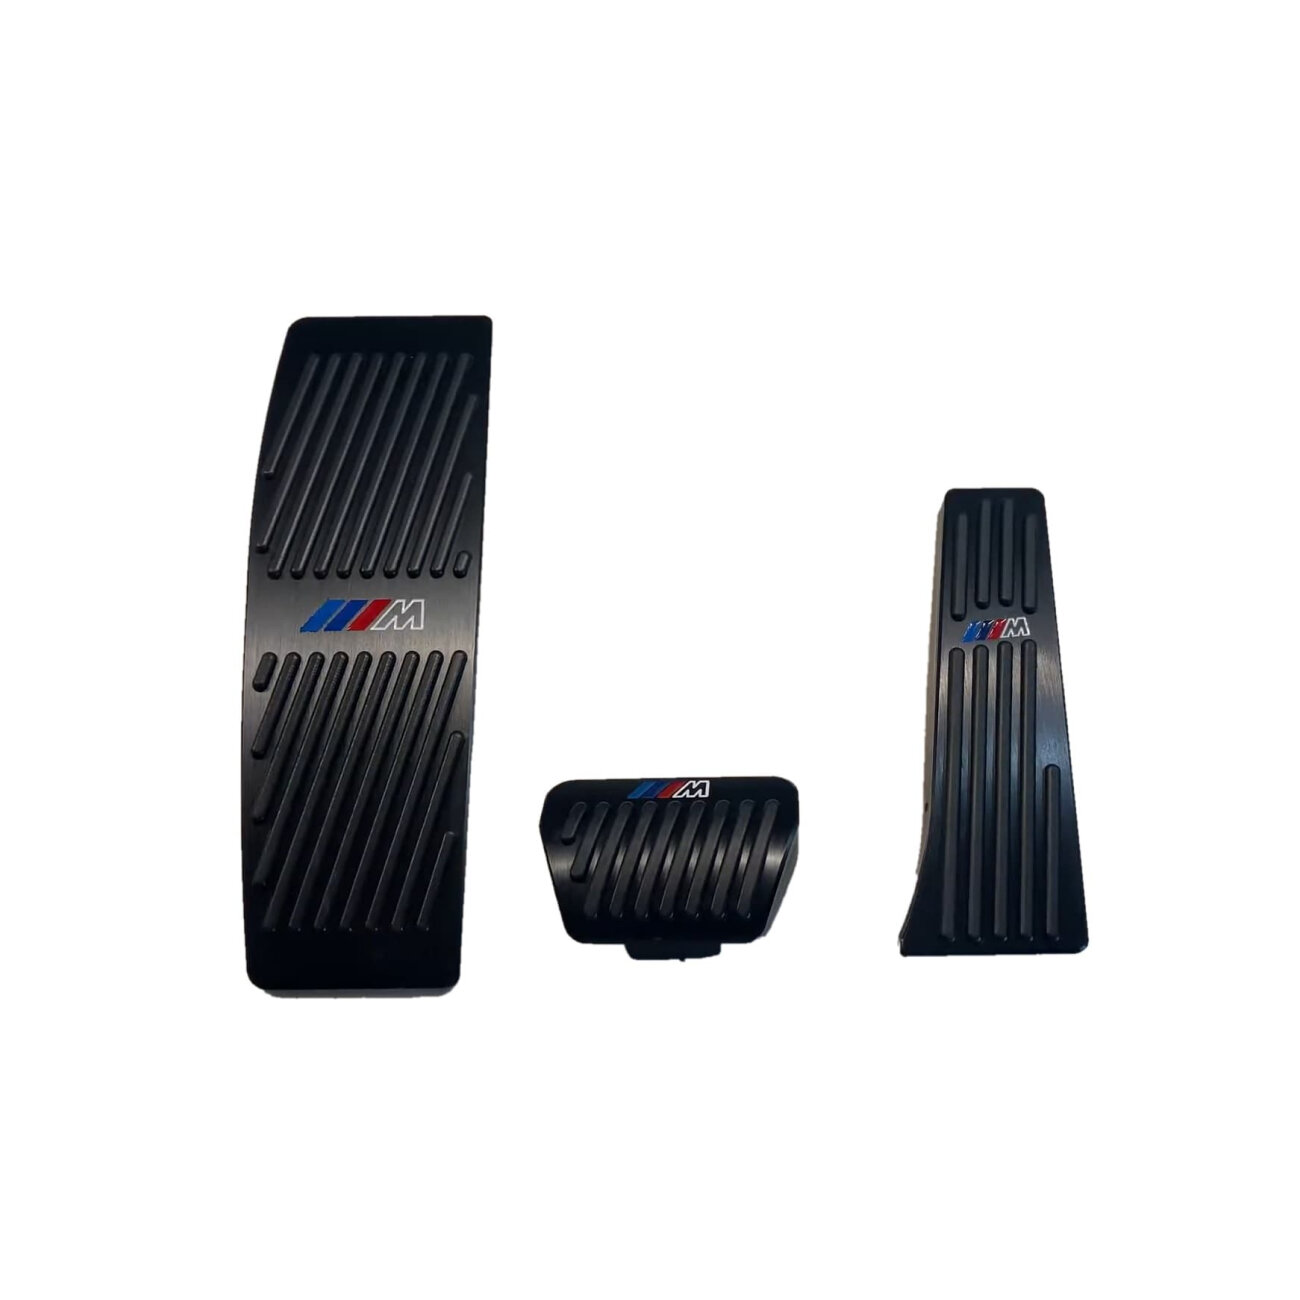 Накладки на педали для BMW 1,2,3,4 серии M-power без сверления